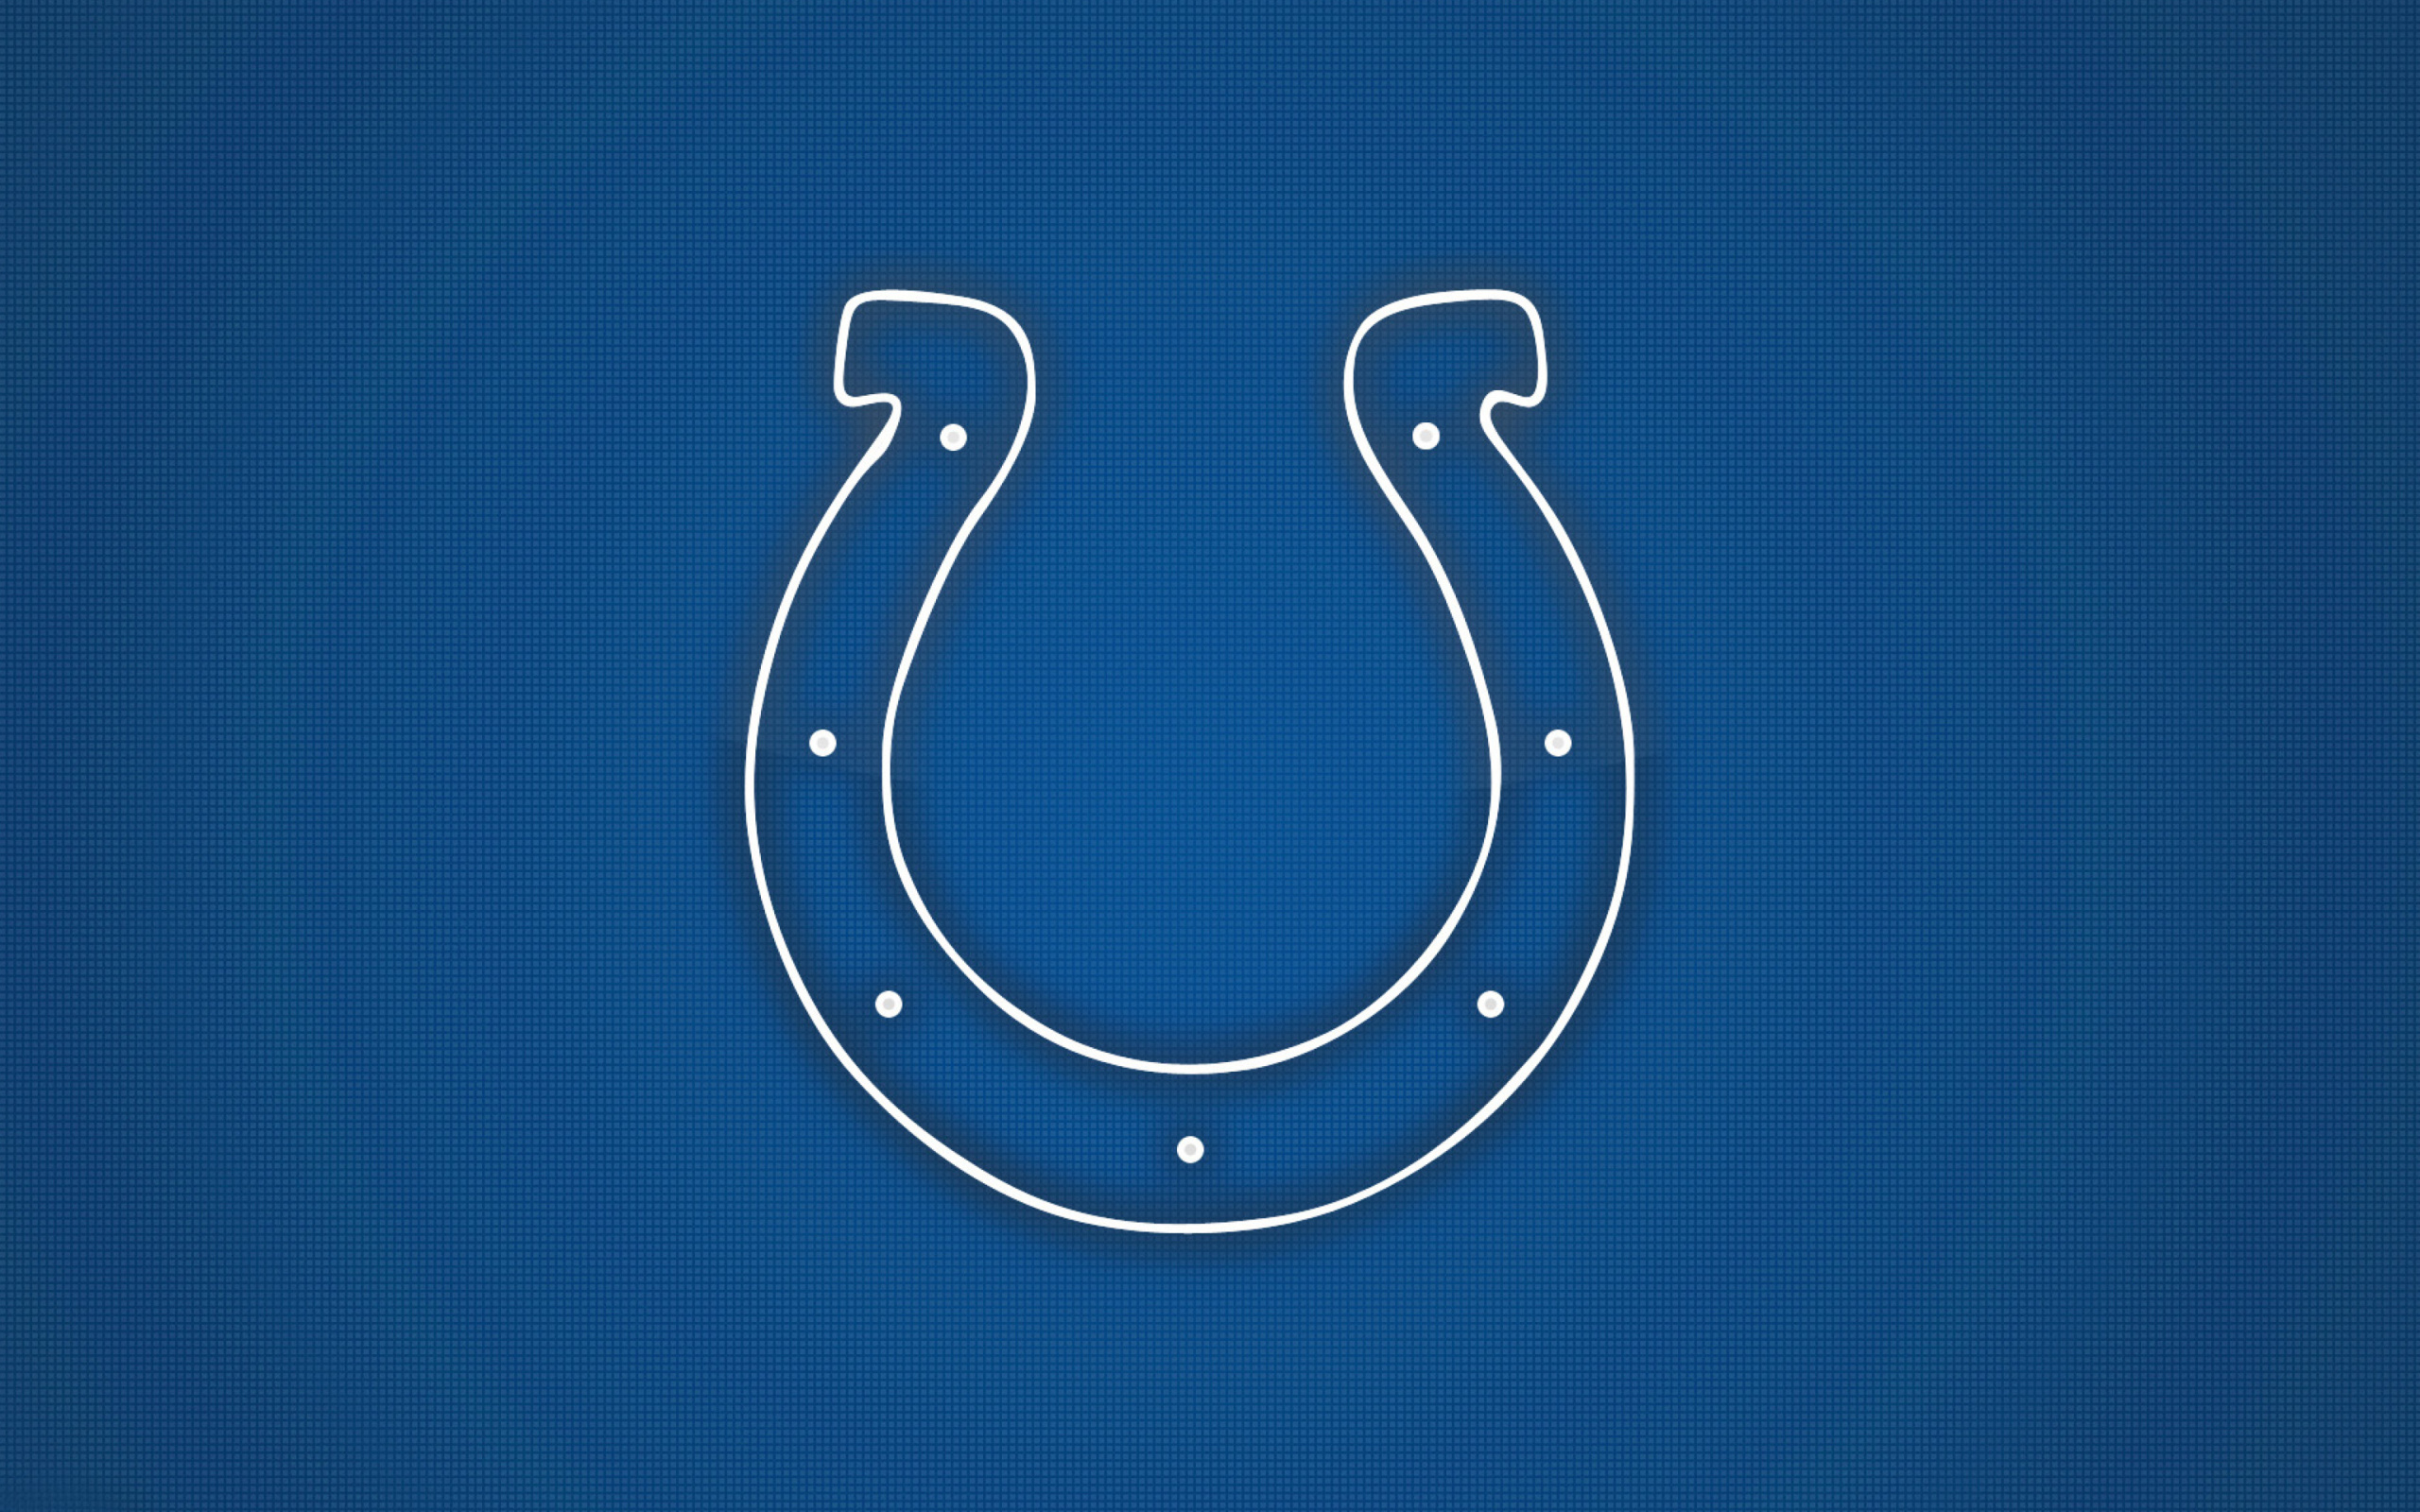 Indianapolis Colts NFL wallpaper 2560x1600